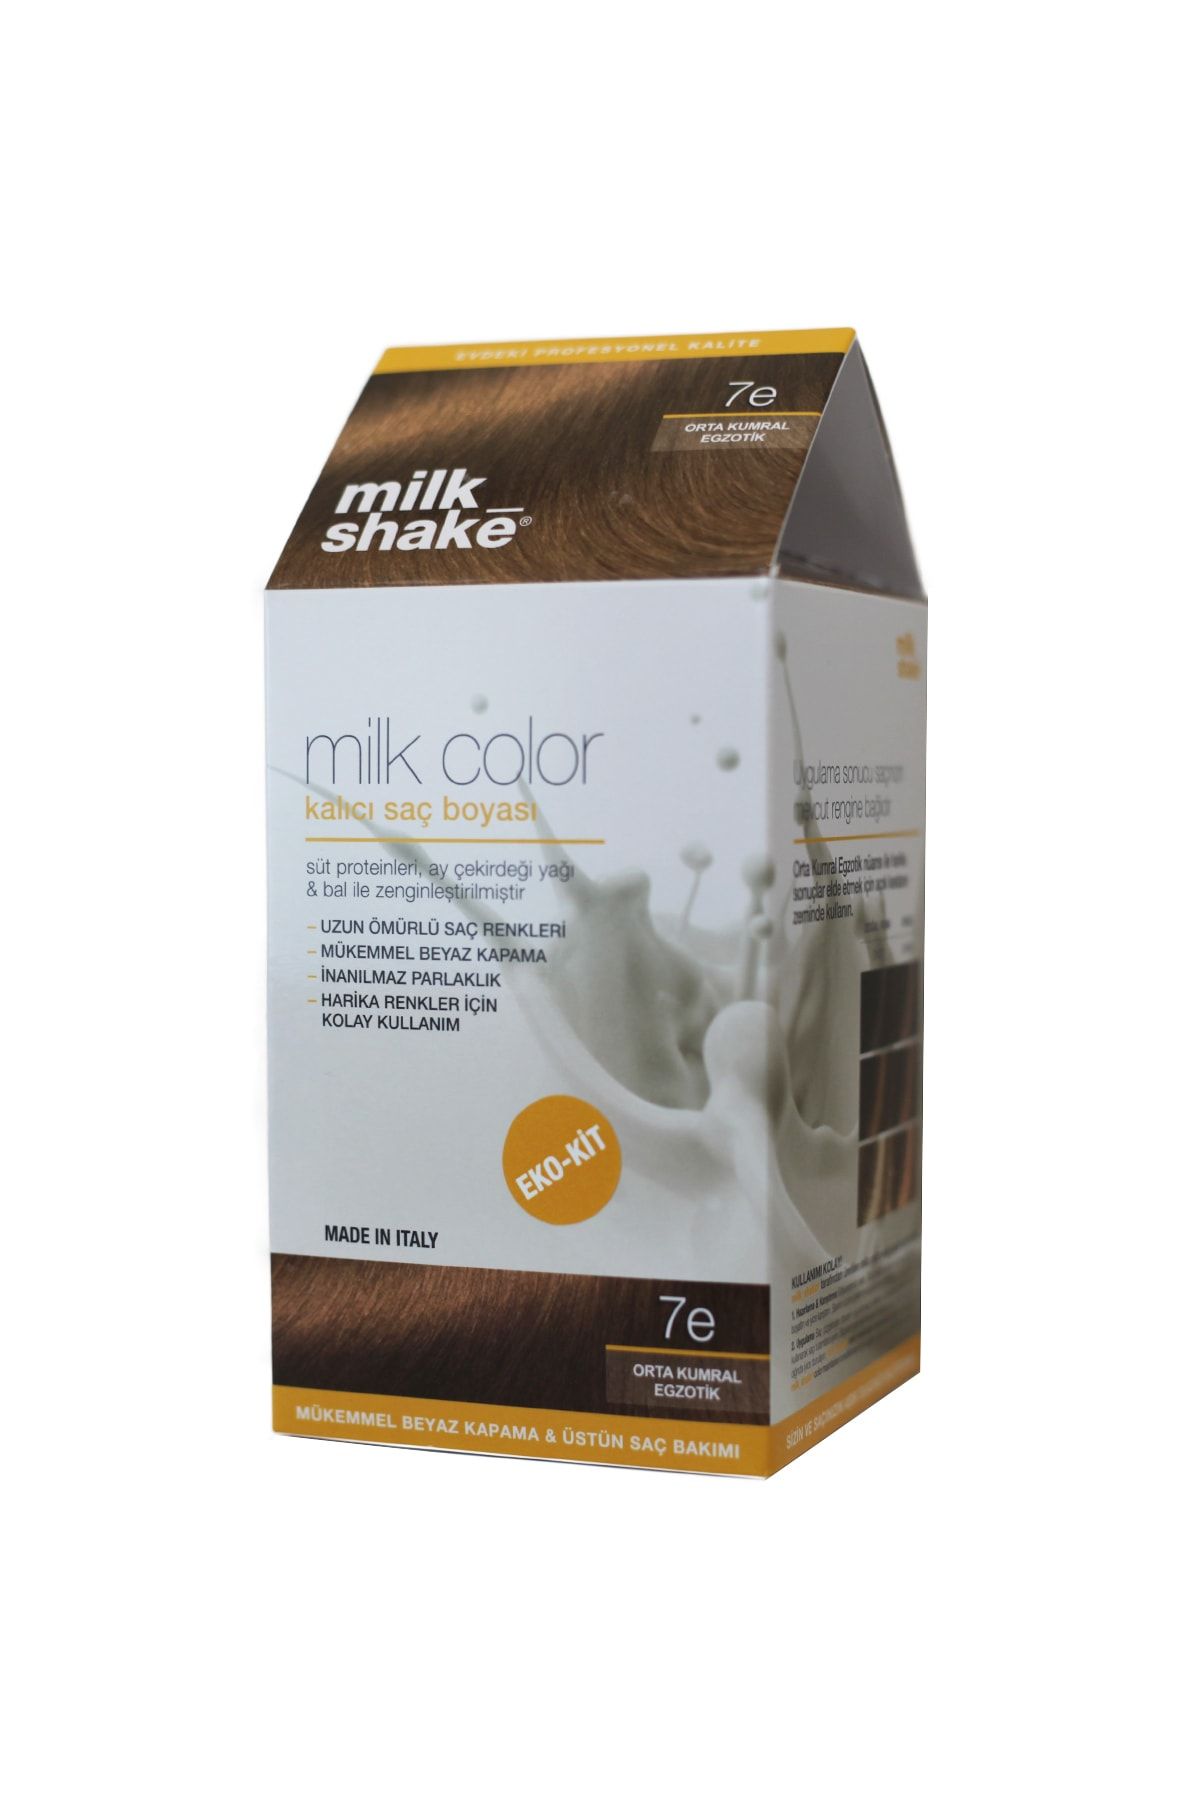 Milkshake Milk_shake Milk Color Eko-kit Orta Kumral Egzotik -7e (Köpüksüz)